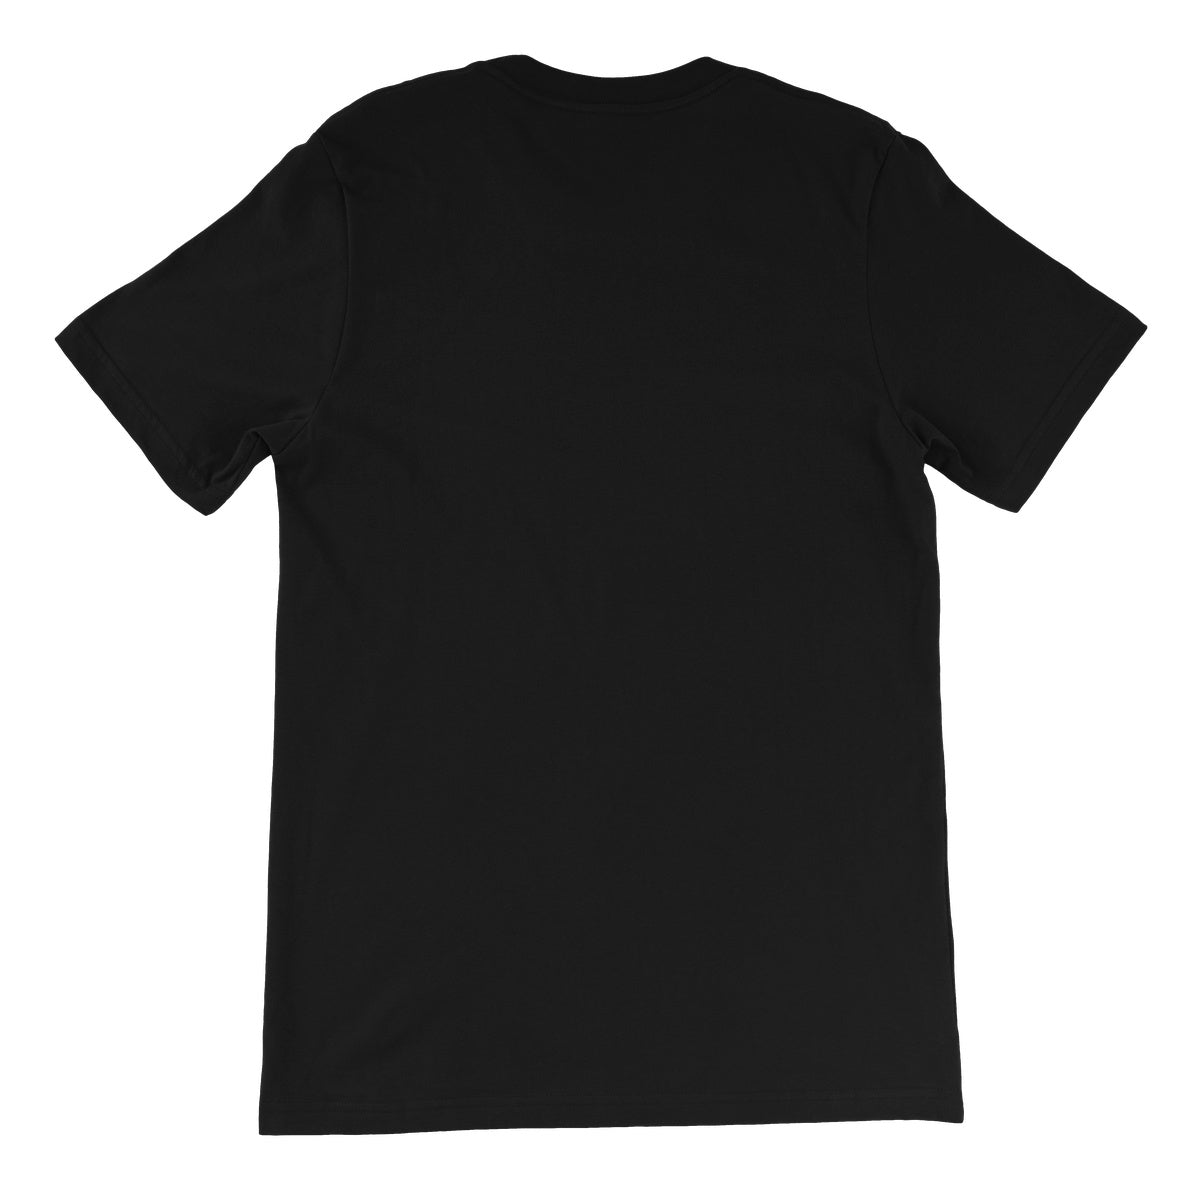 TNT Extreme Wrestling Jody Fleisch Unisex Short Sleeve T-Shirt